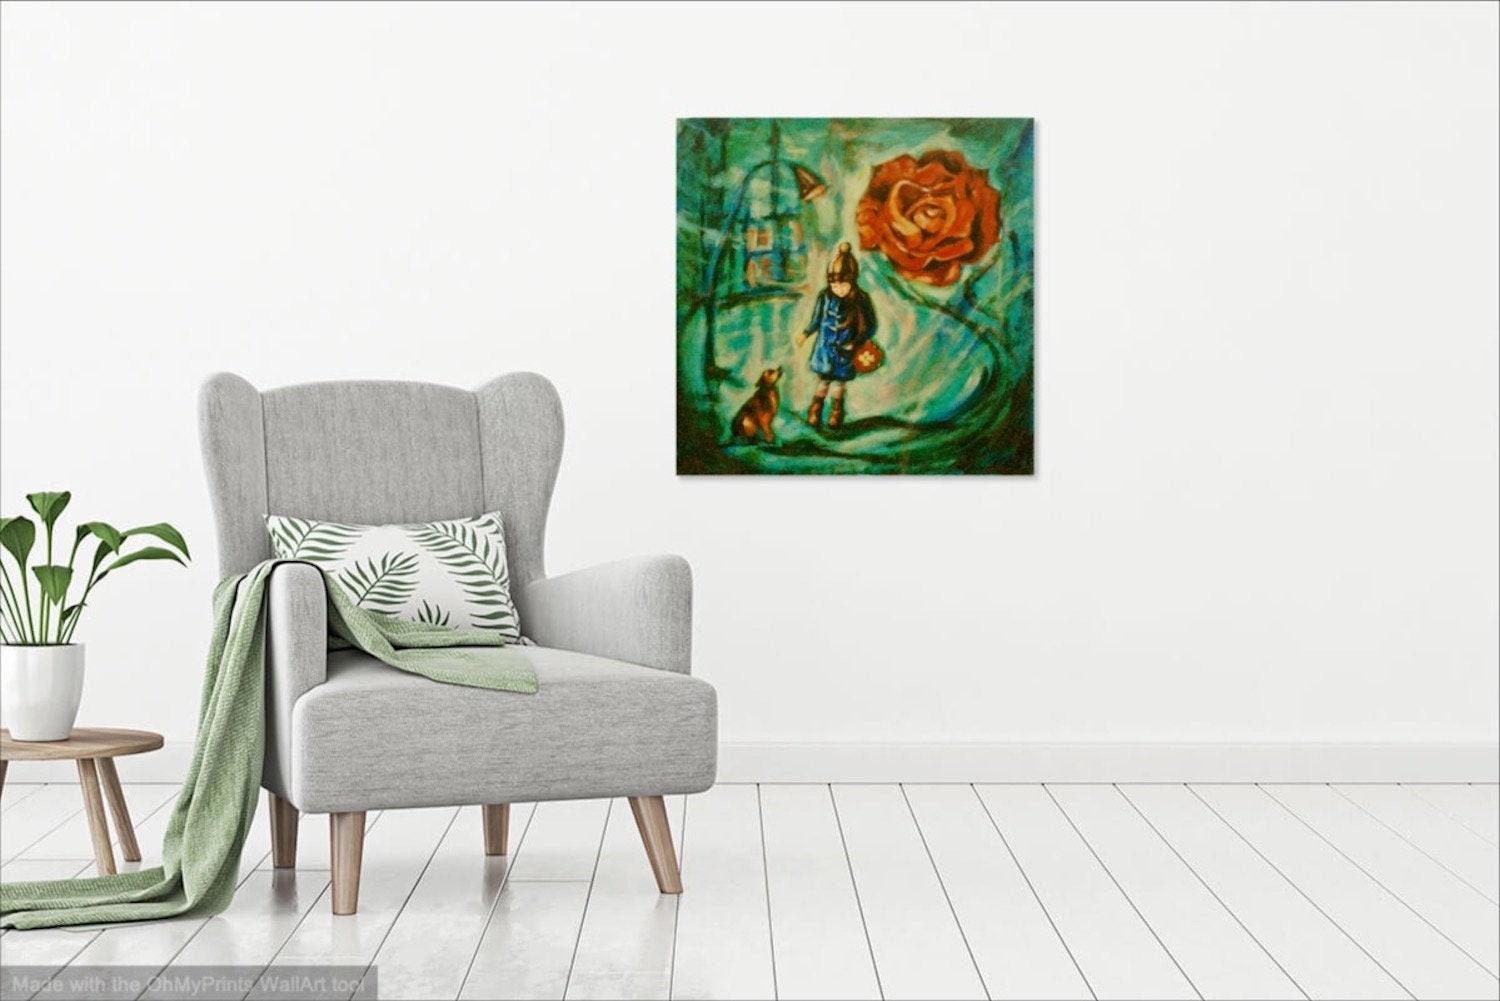 Girl and Dog - Impressionist Original Painting - Whimsical City Scene - Vintage Rose Symbol - Little Girl - Dreamlike Art - Artistic Delight